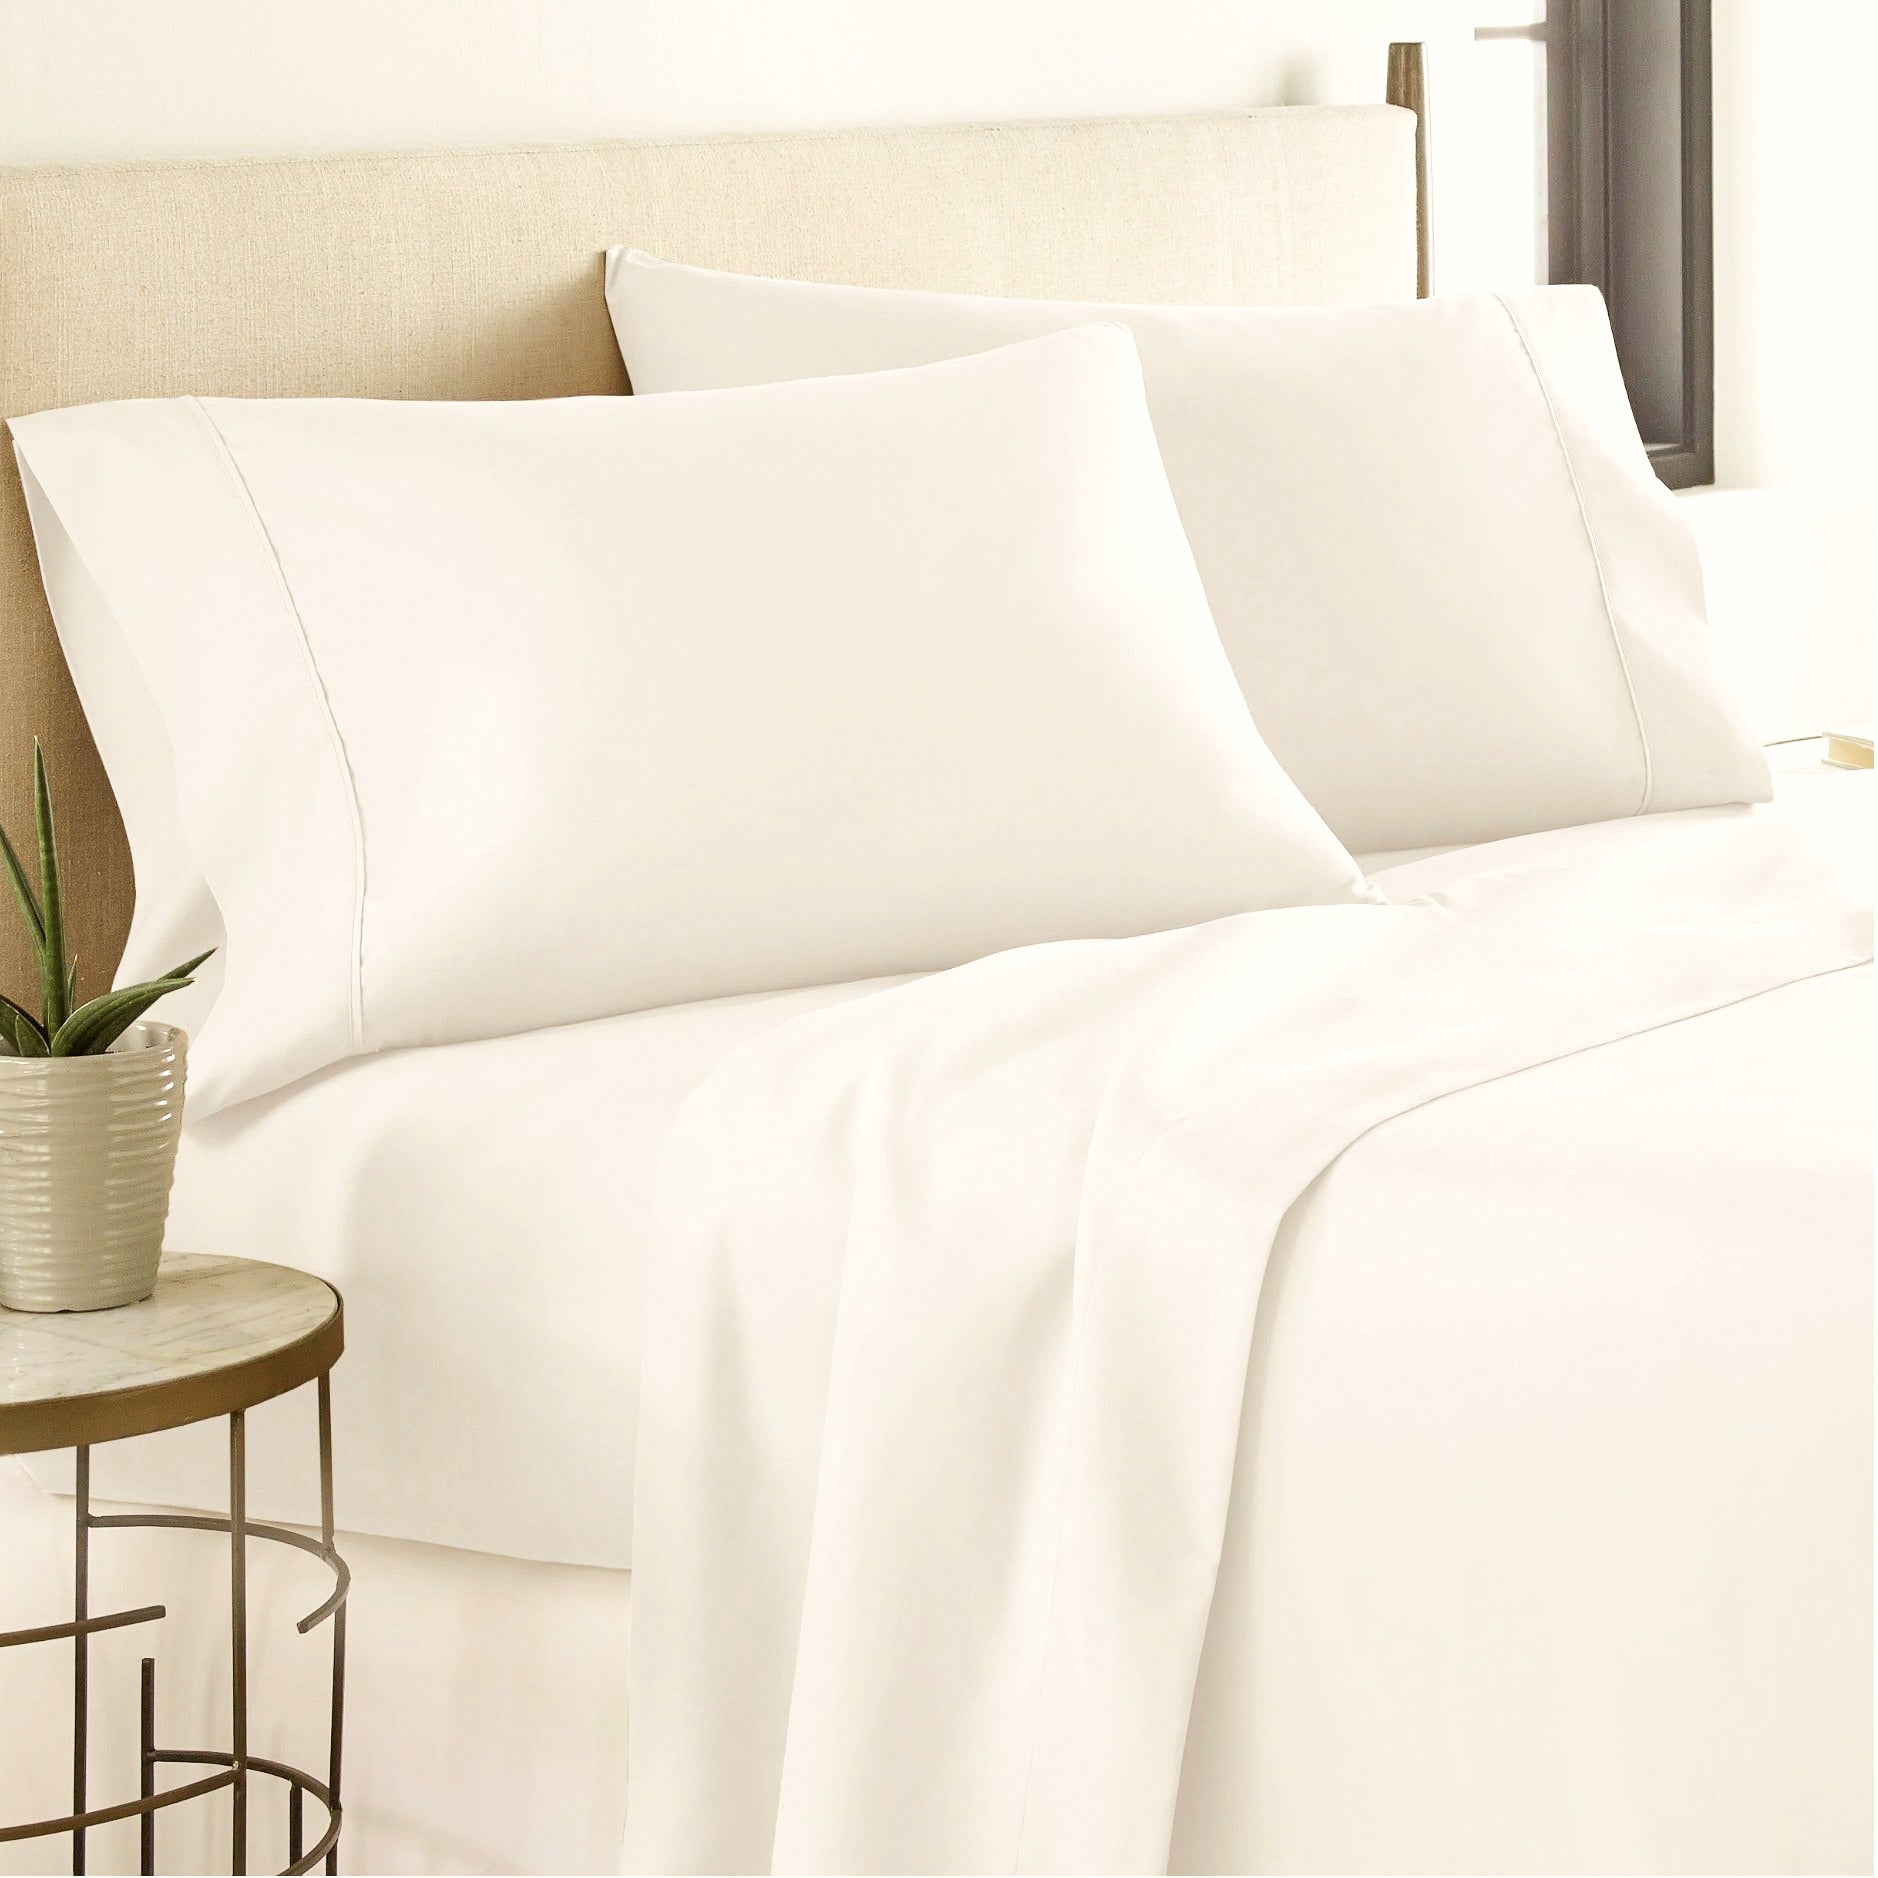 organic cotton bed sheets India, organic cotton sheets